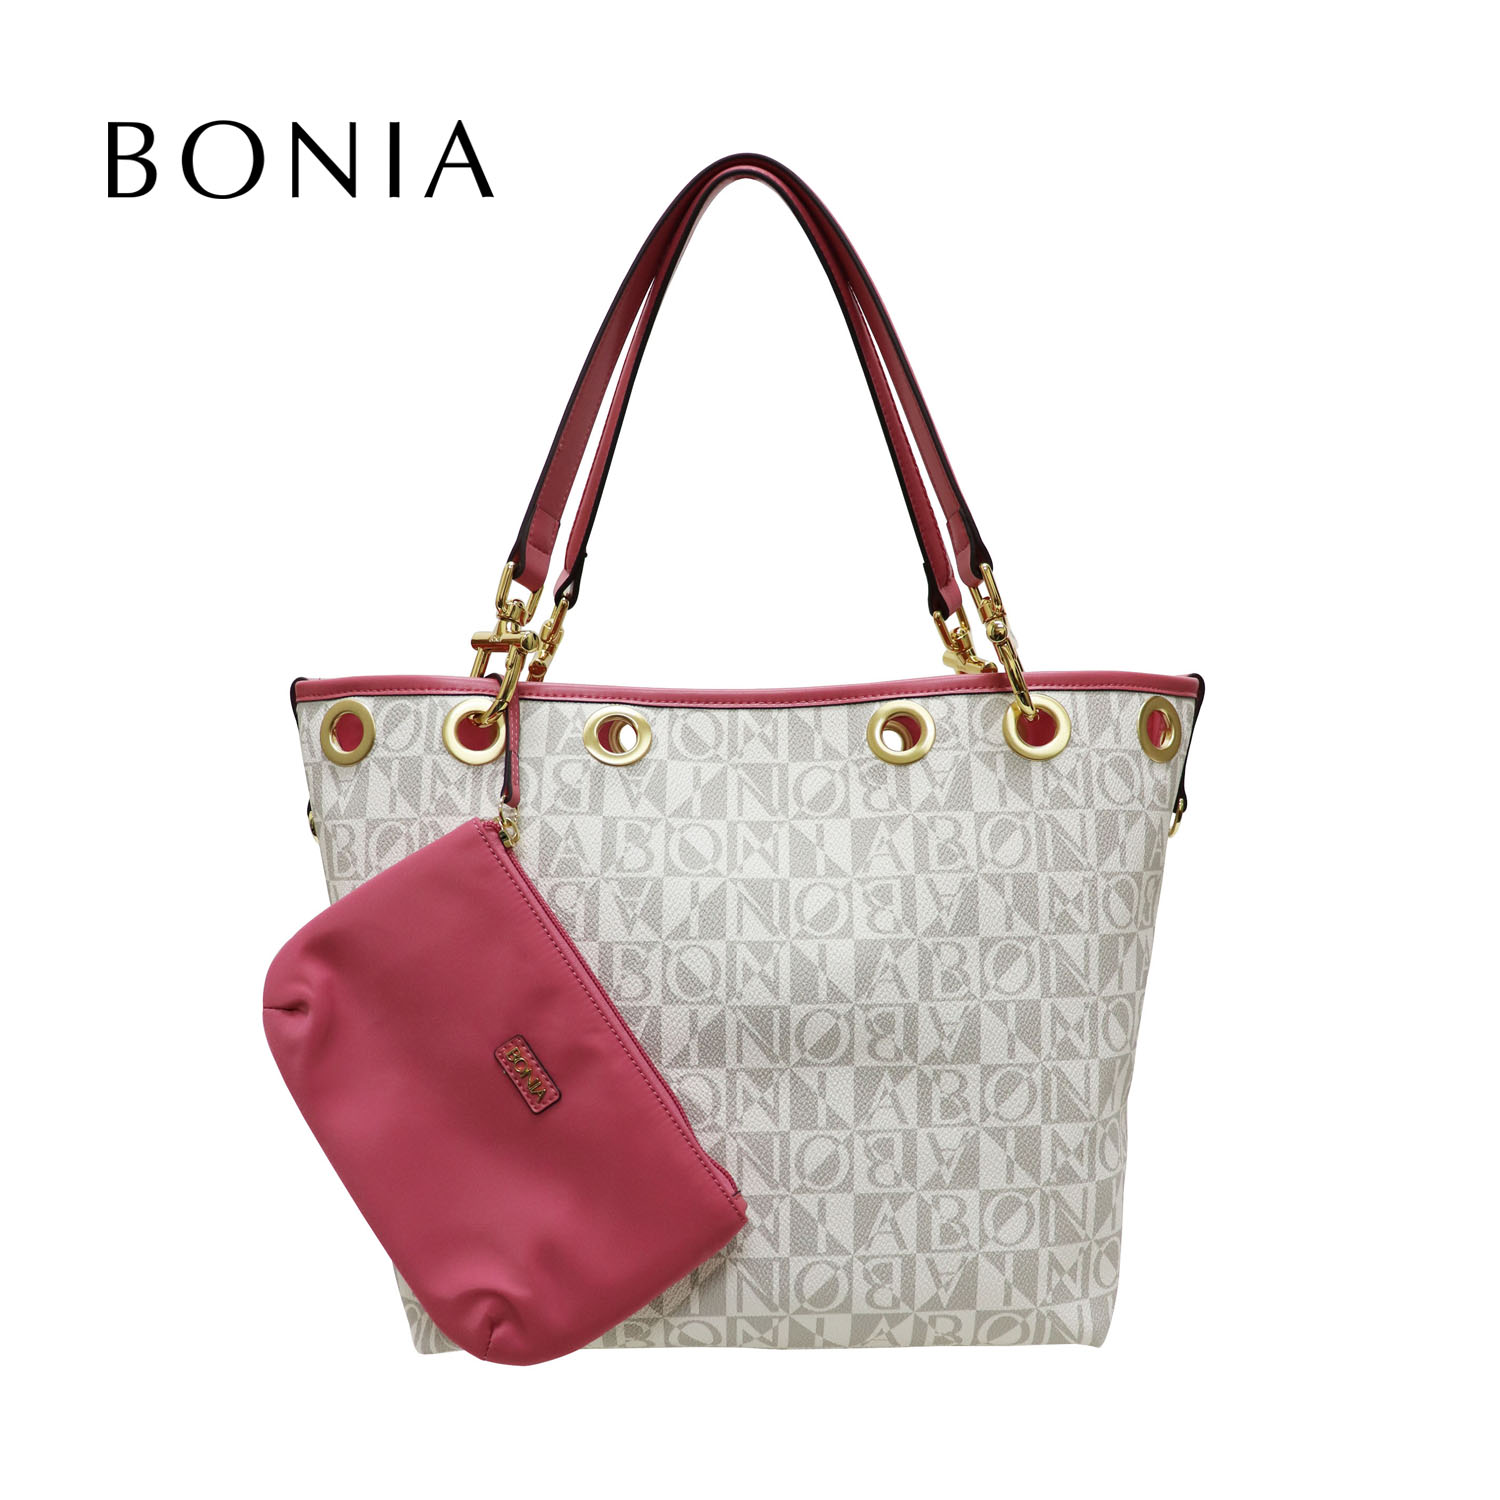 Bonia monogram tote bag authentic guaranteed, Women's Fashion